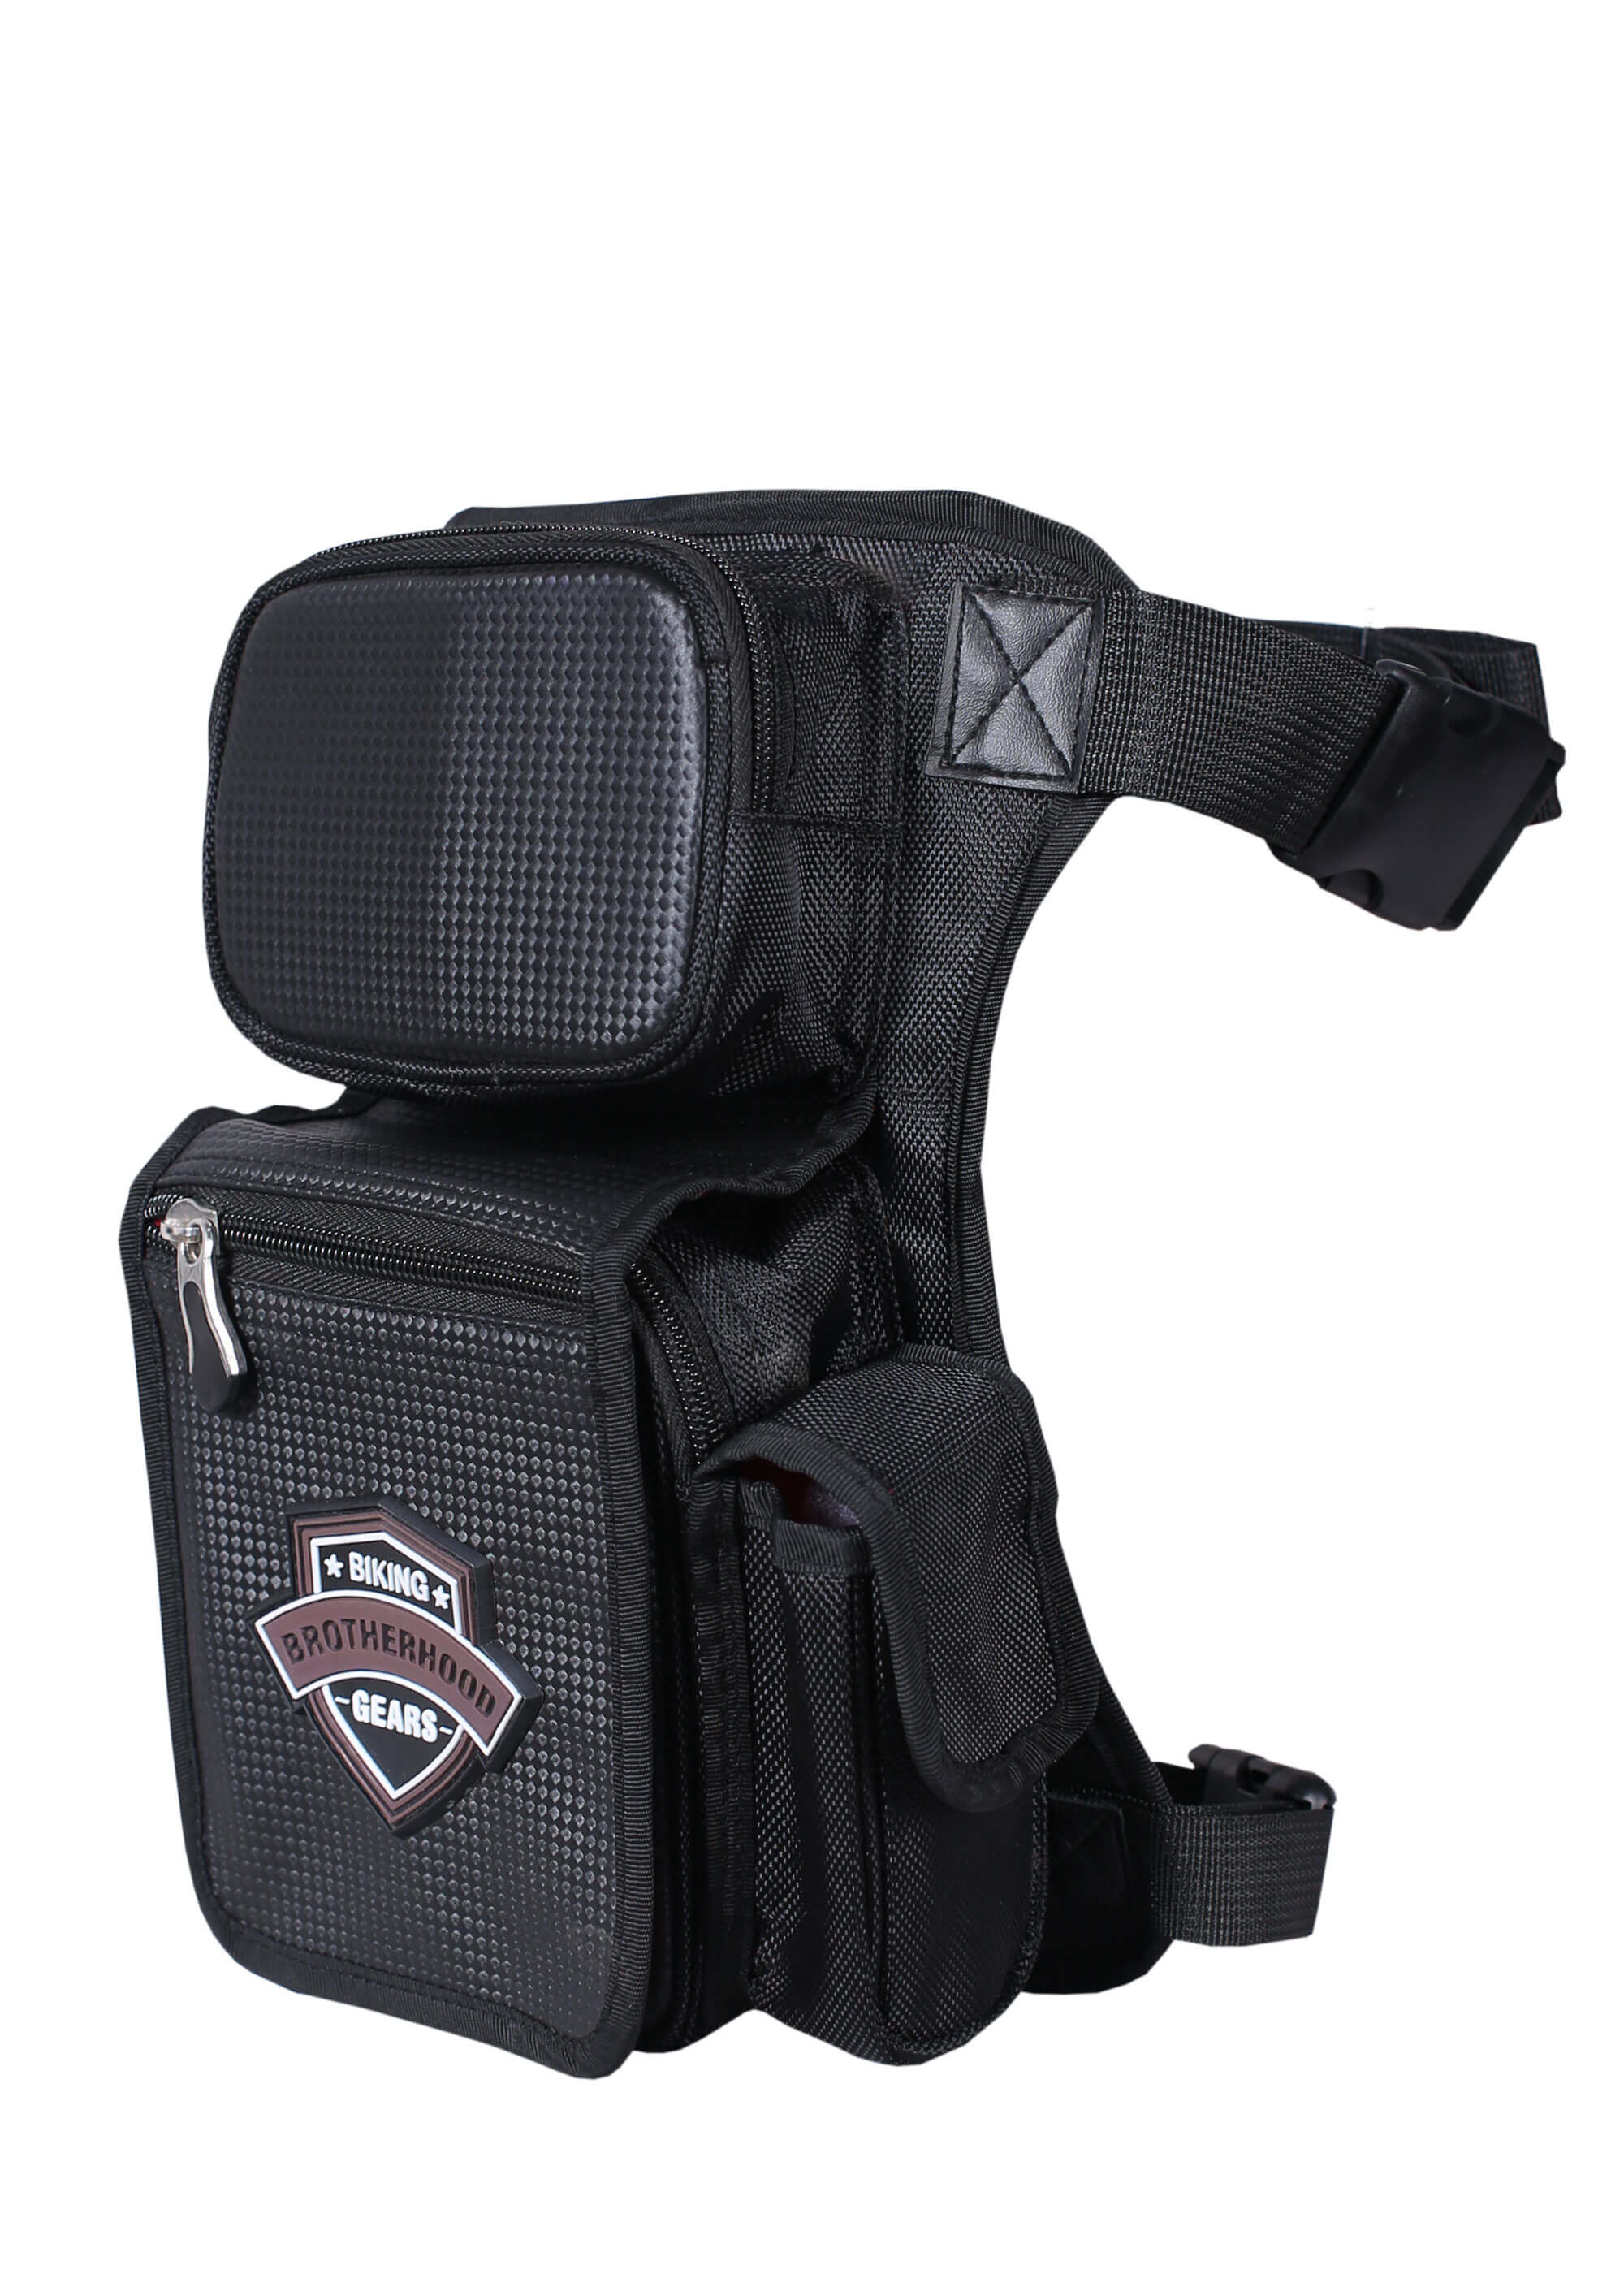 Carbonado Turtle Thigh Bag | Motorcycle accessories Store